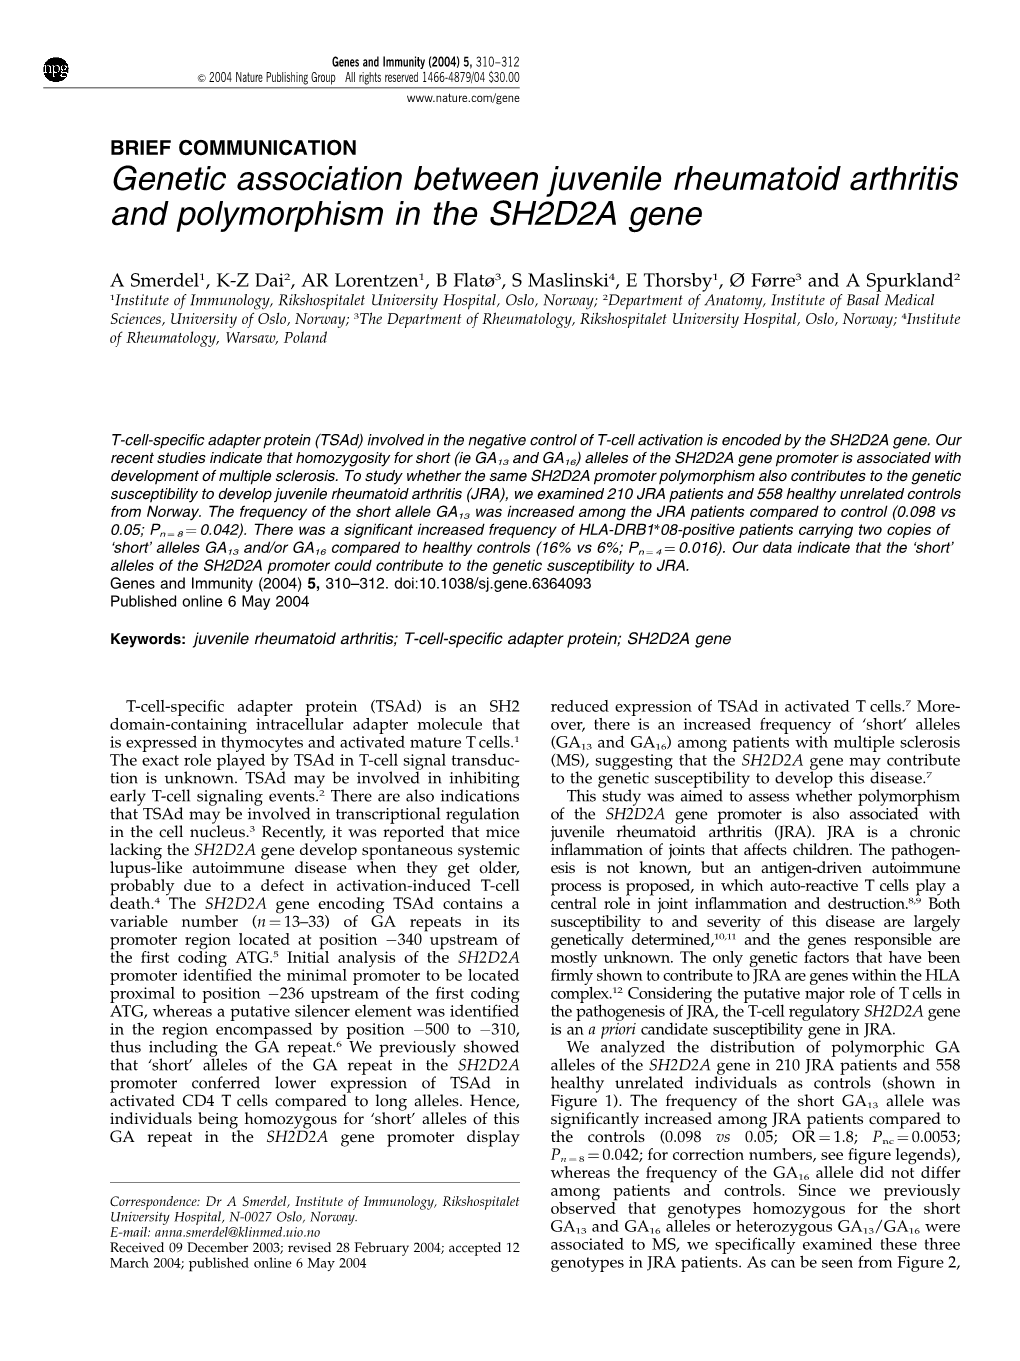 Genetic Association Between Juvenile Rheumatoid Arthritis and Polymorphism in the SH2D2A Gene